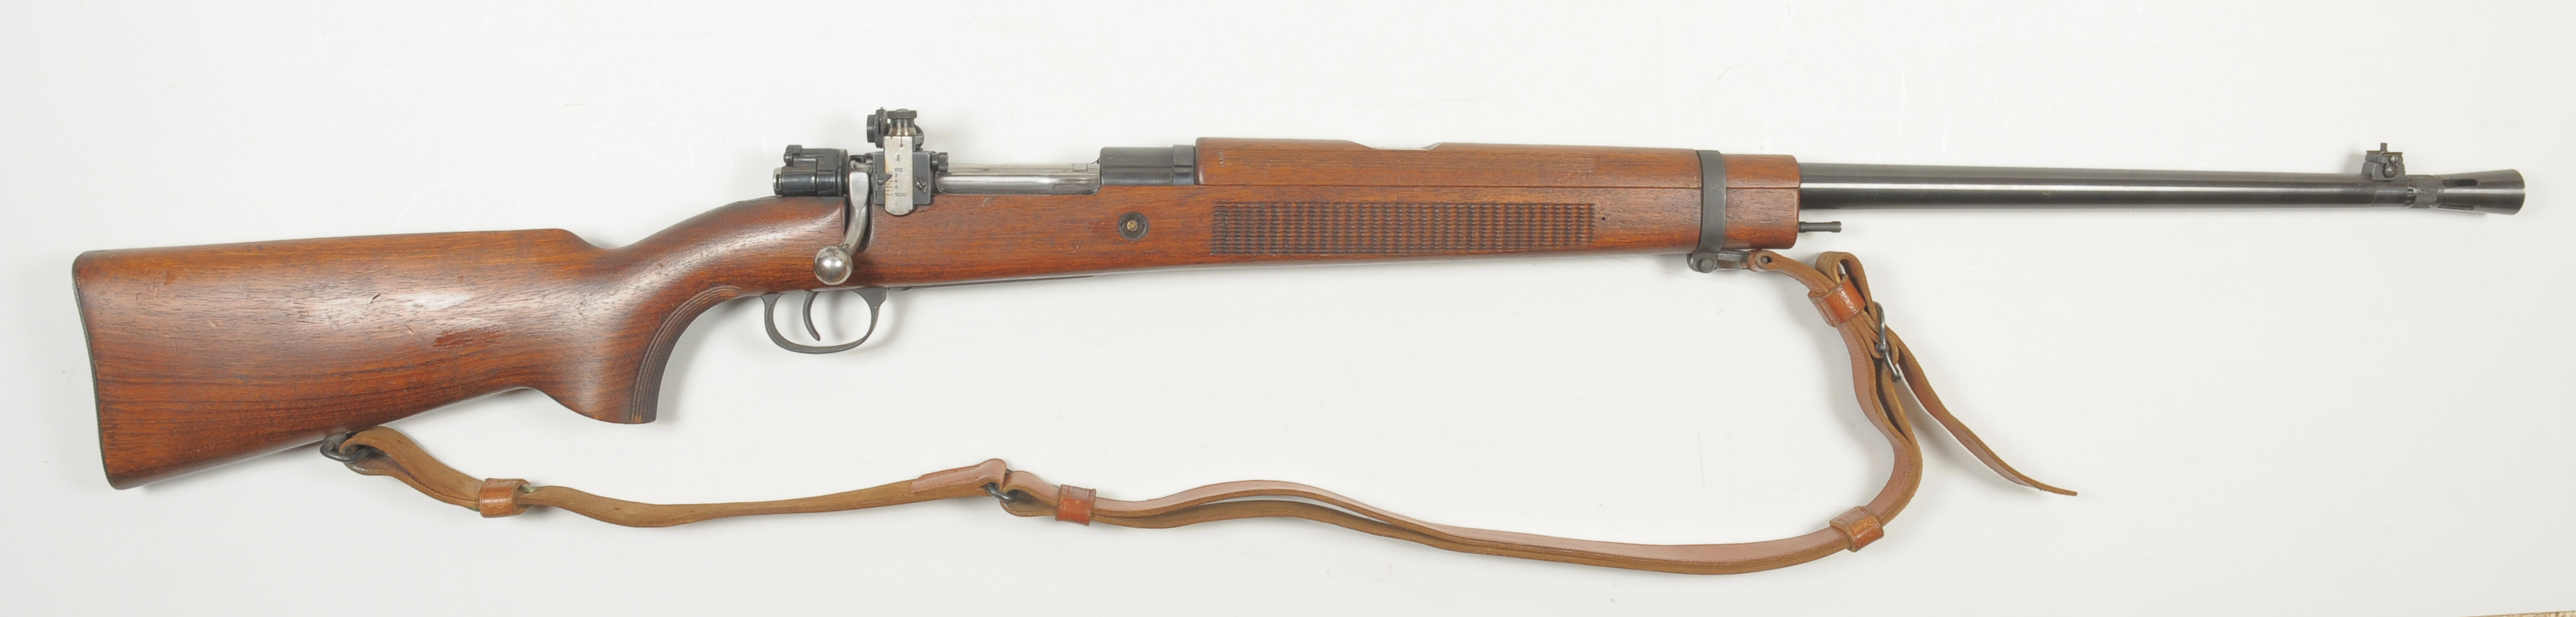 ./guns/rifle/bilder/Rifle-Kongsberg-Mauser-M58-65-1.jpg